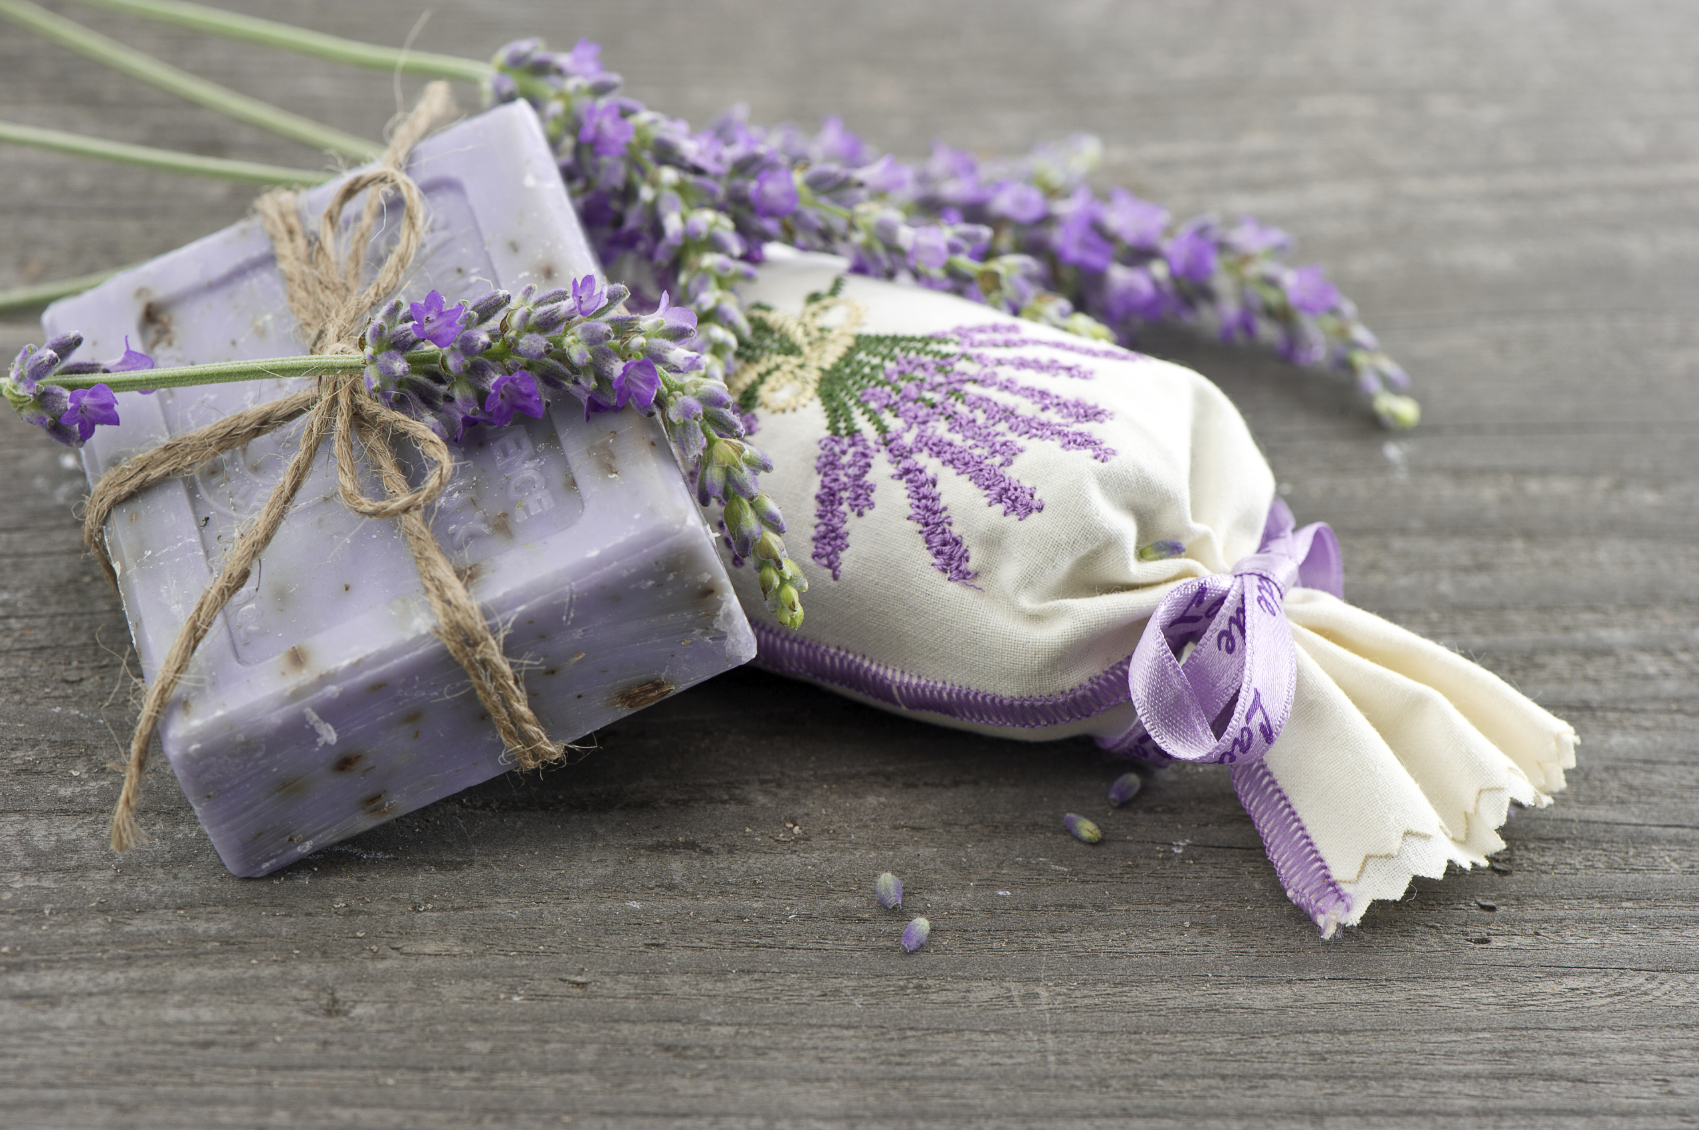 lavendar-soap-and-lavendar-sachets.jpg